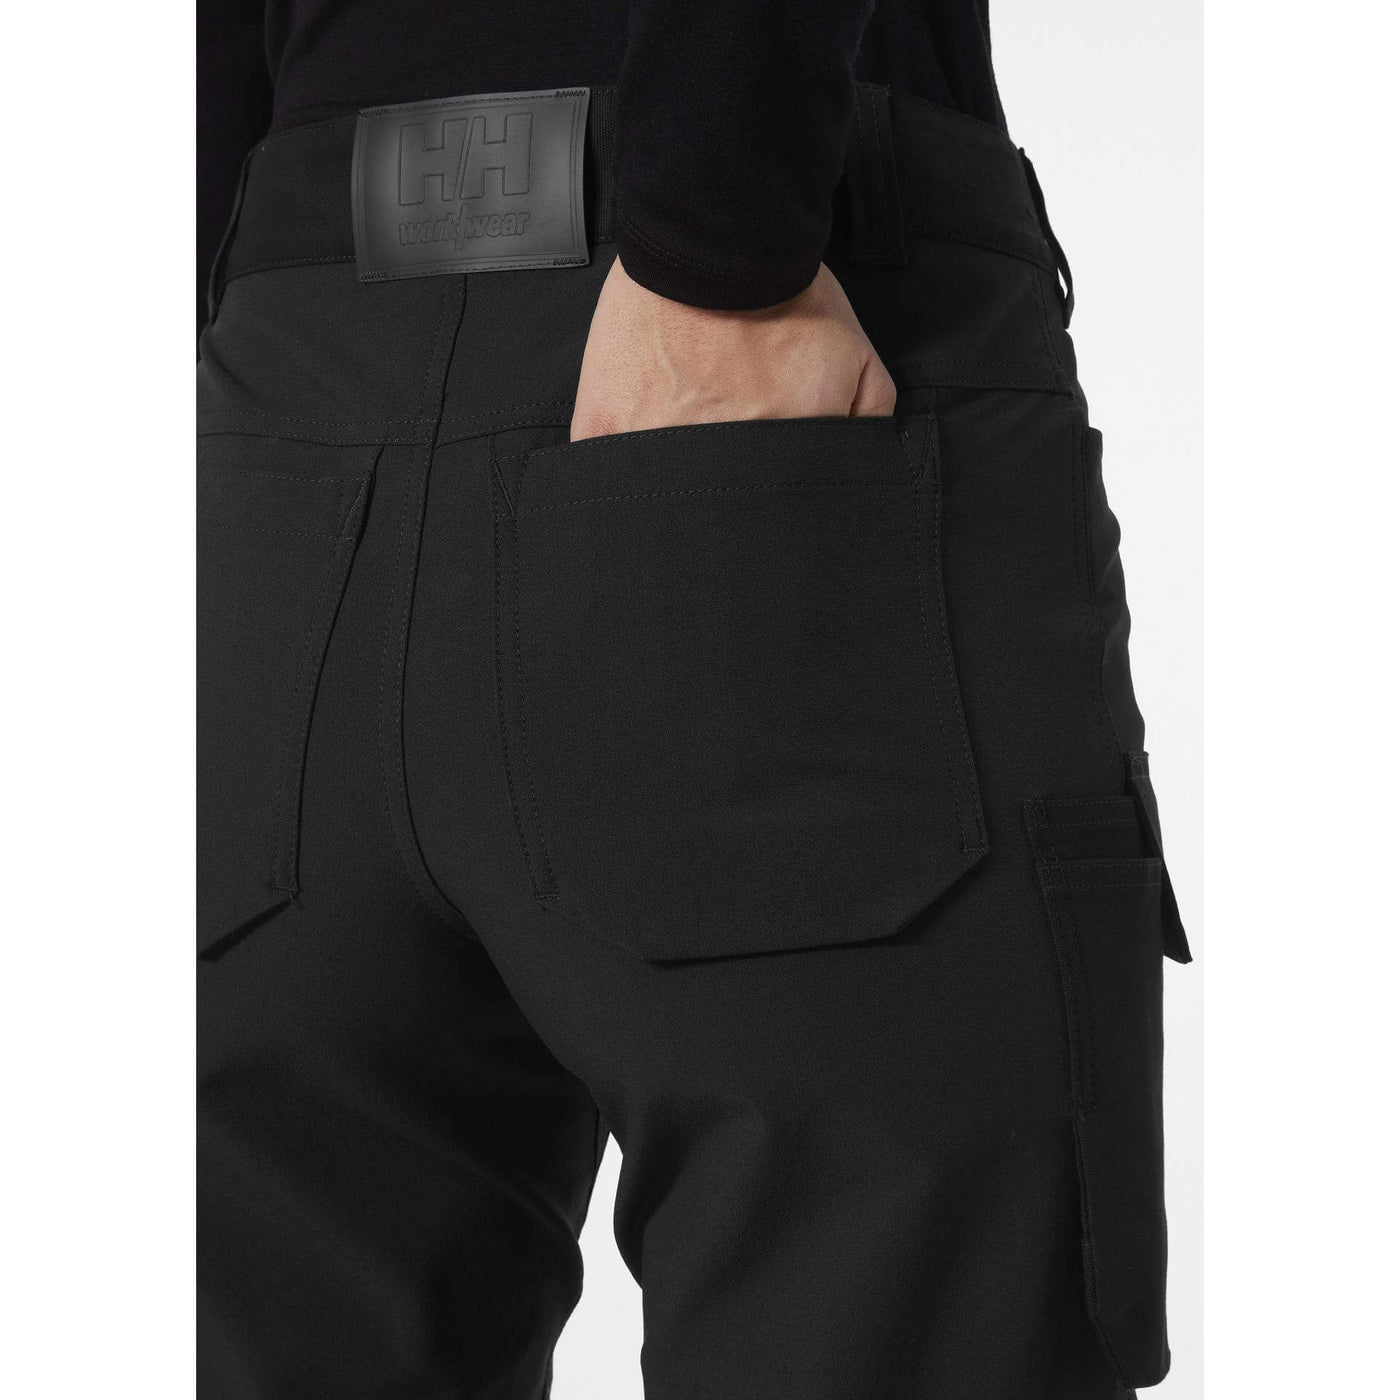 Helly Hansen Luna 4X Womens 4-Way-Stretch Cargo Trousers Black Feature 2#colour_black